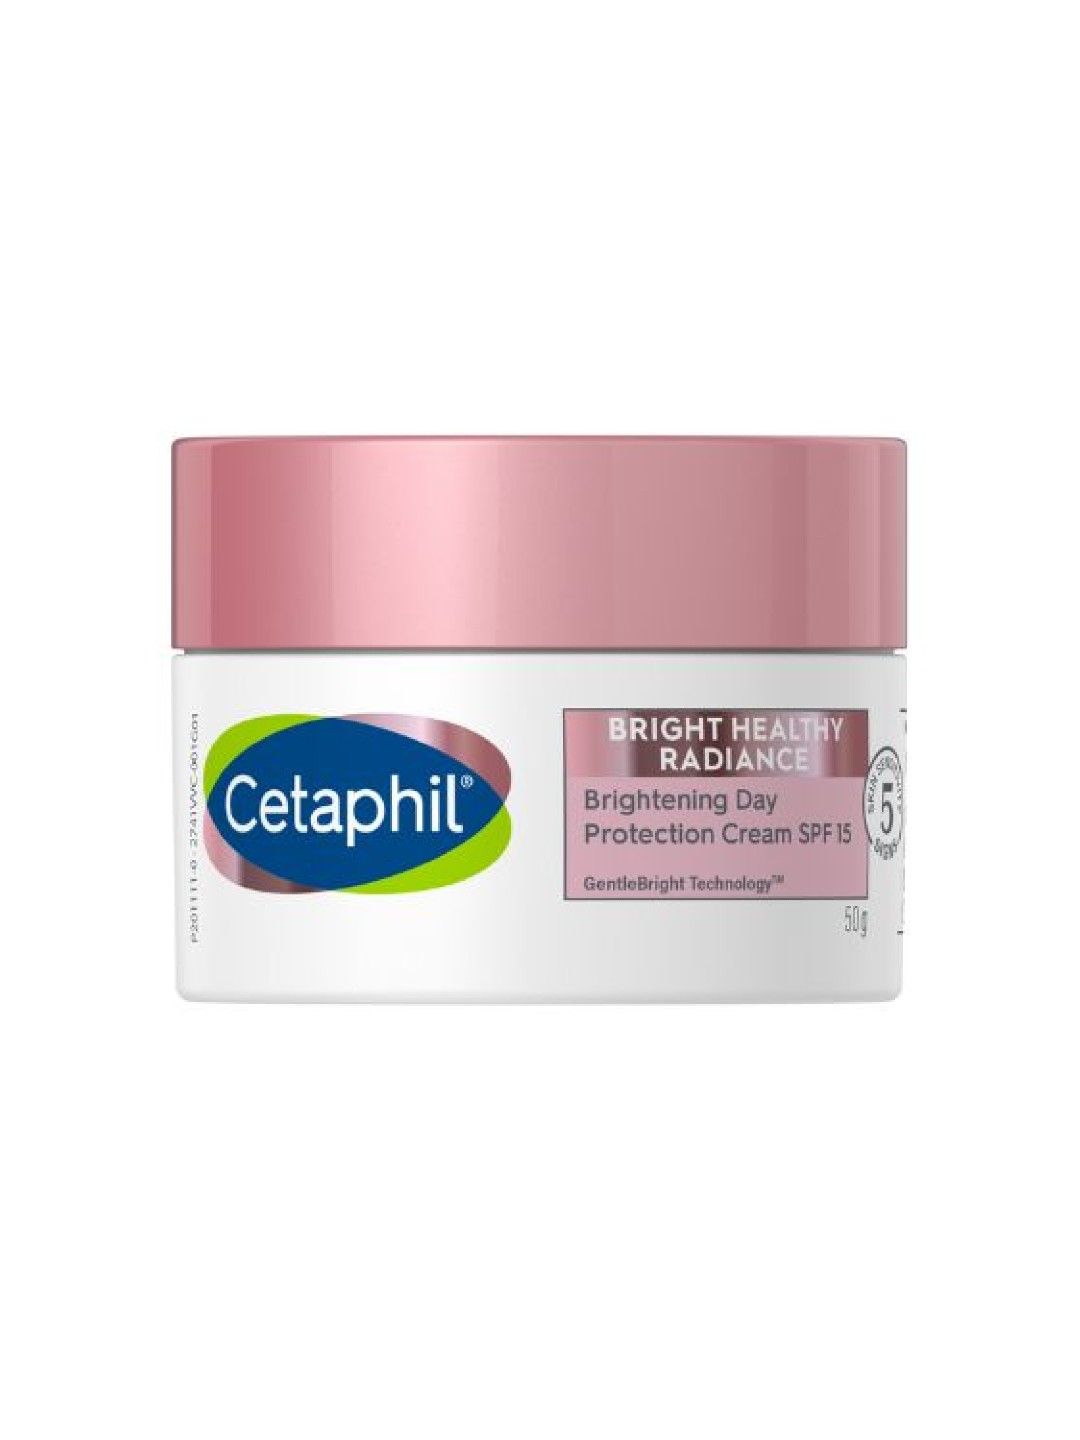 Cetaphil Brightening Day Protection Cream SPF15 (50g)